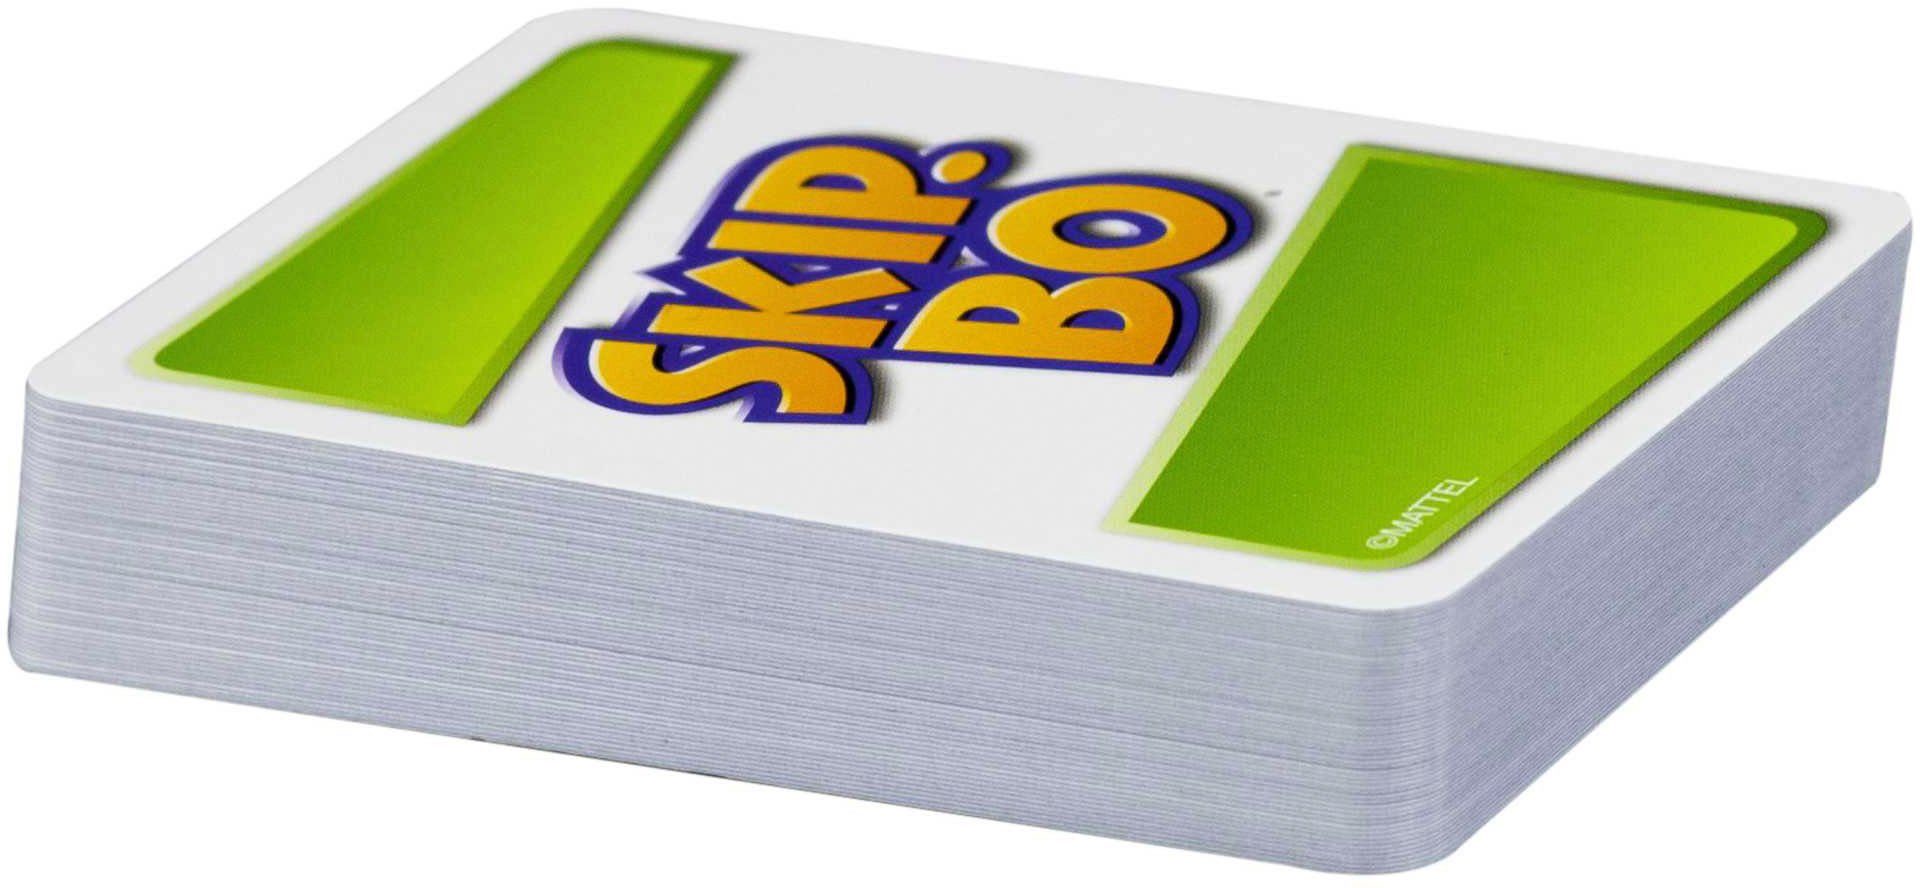 Mattel Kartenspiel Skip-Bo Spiel, games